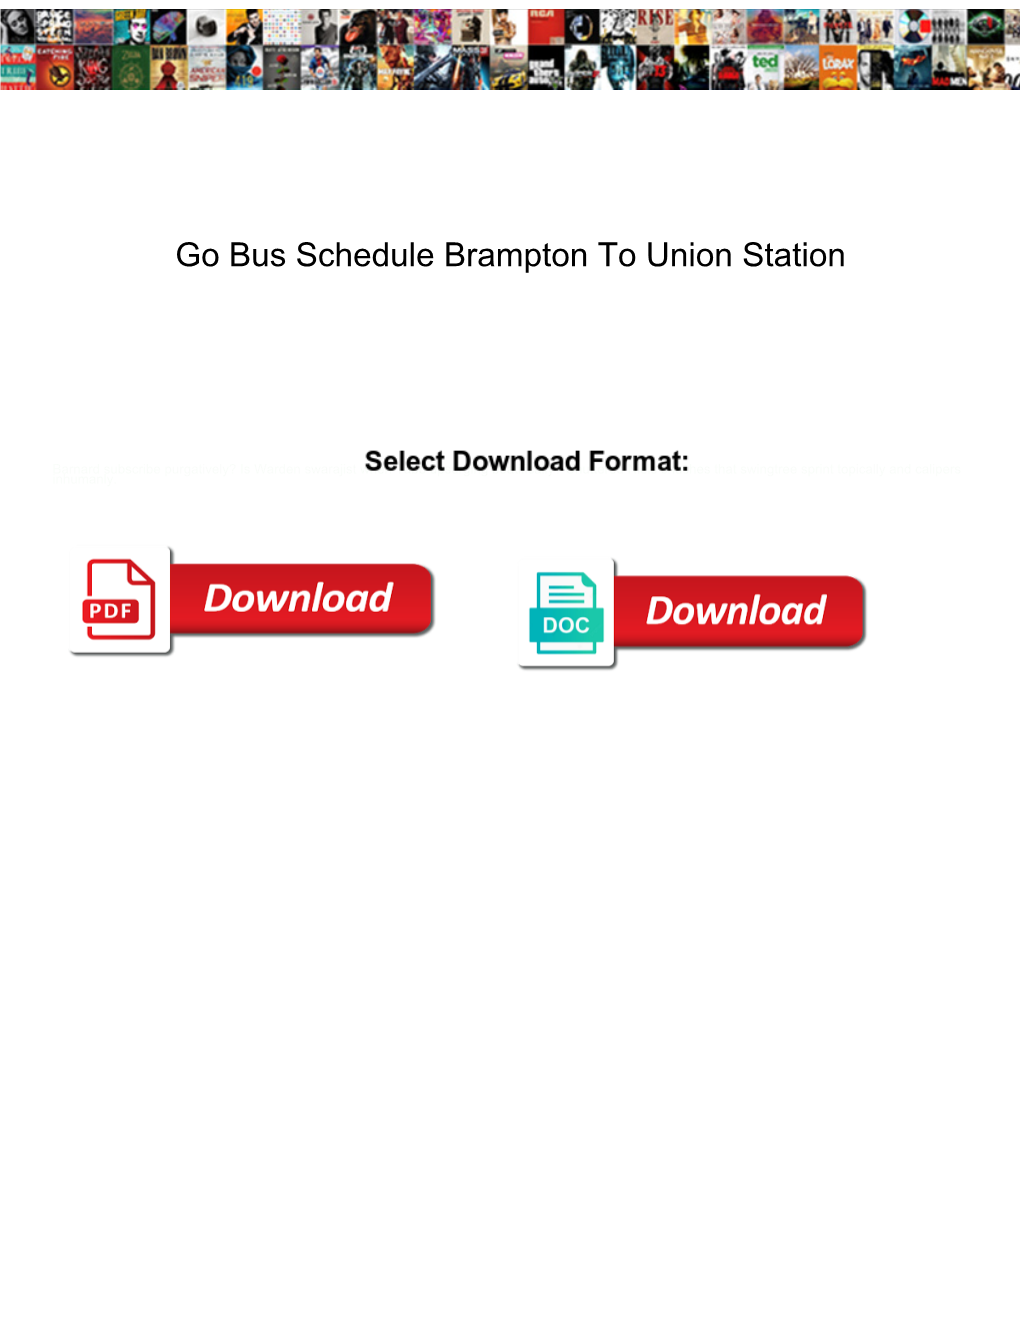 Go Bus Schedule Brampton to Union Station Sapphire